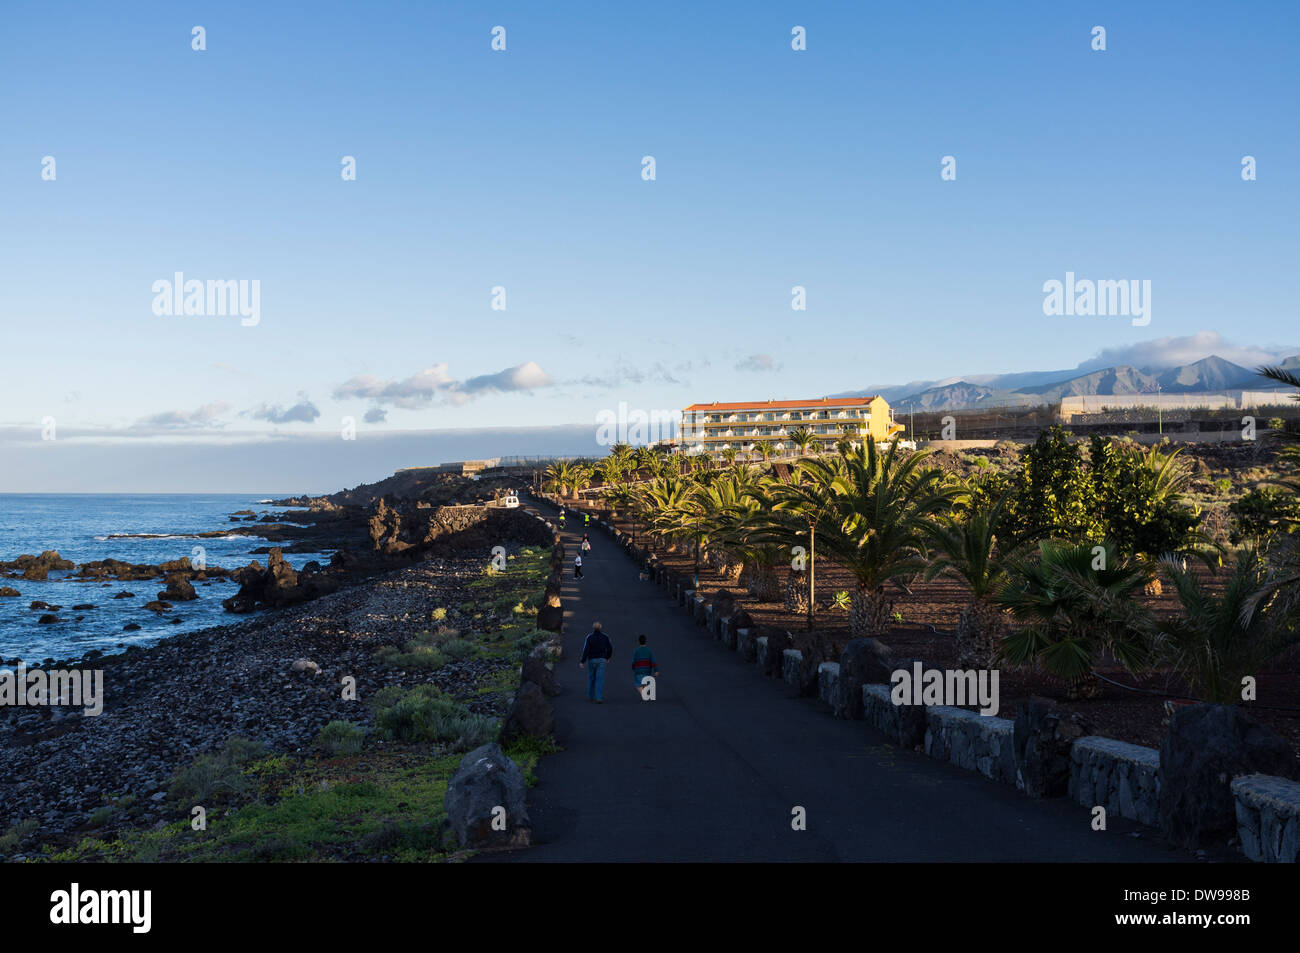 Early morning walkers on the coastal path in Playa San Juan, Tenerife, canary Islands, Spain. Stock Photo